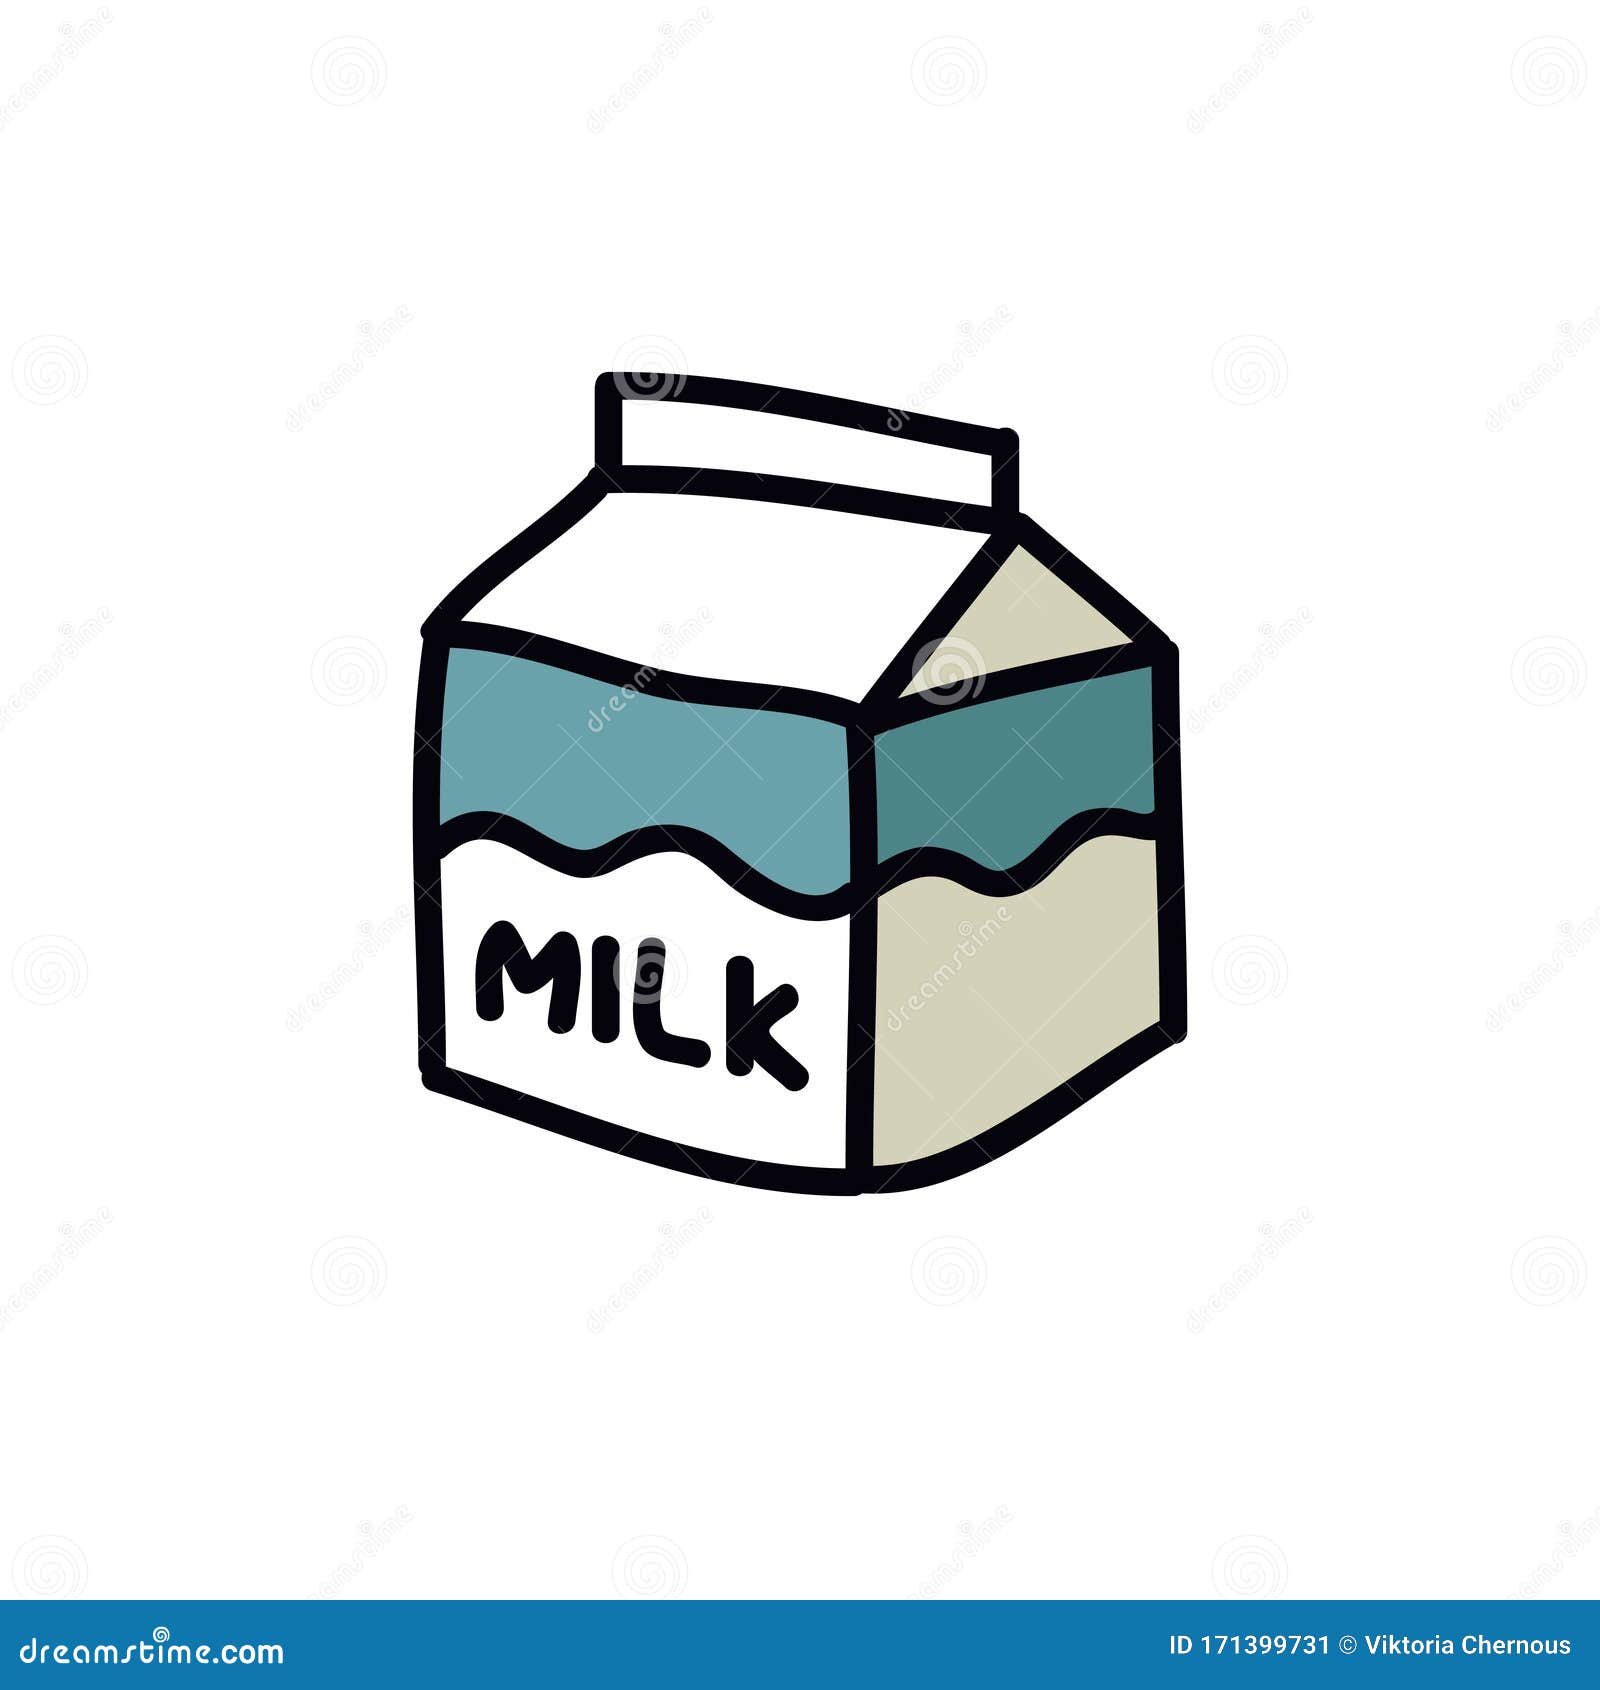 Carton of Milk Doodle Icon, Vector Illustration Stock Illustration